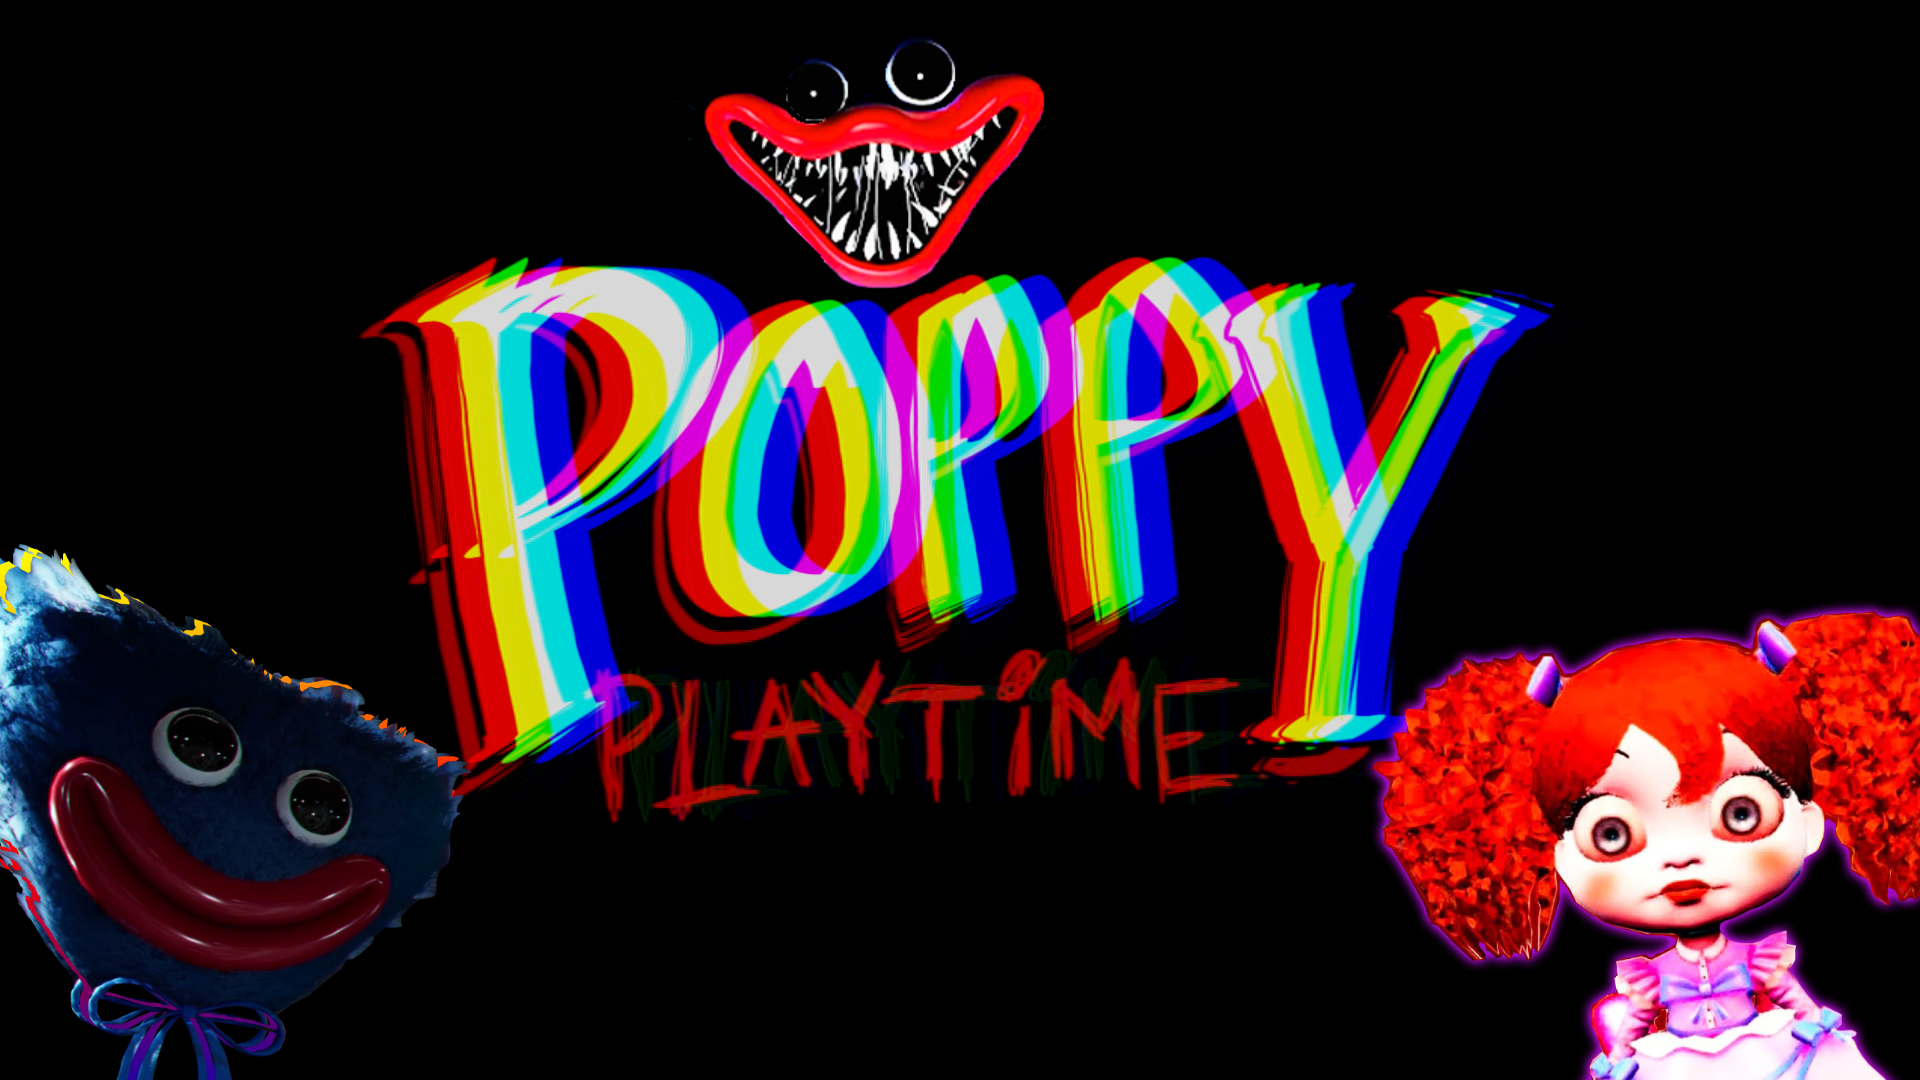 Карта поппи плей. Поппи Плейтайм. Поппи плей тайм Поппи. Poppy Playtime надпись. Логотип Поппи плей тайм.